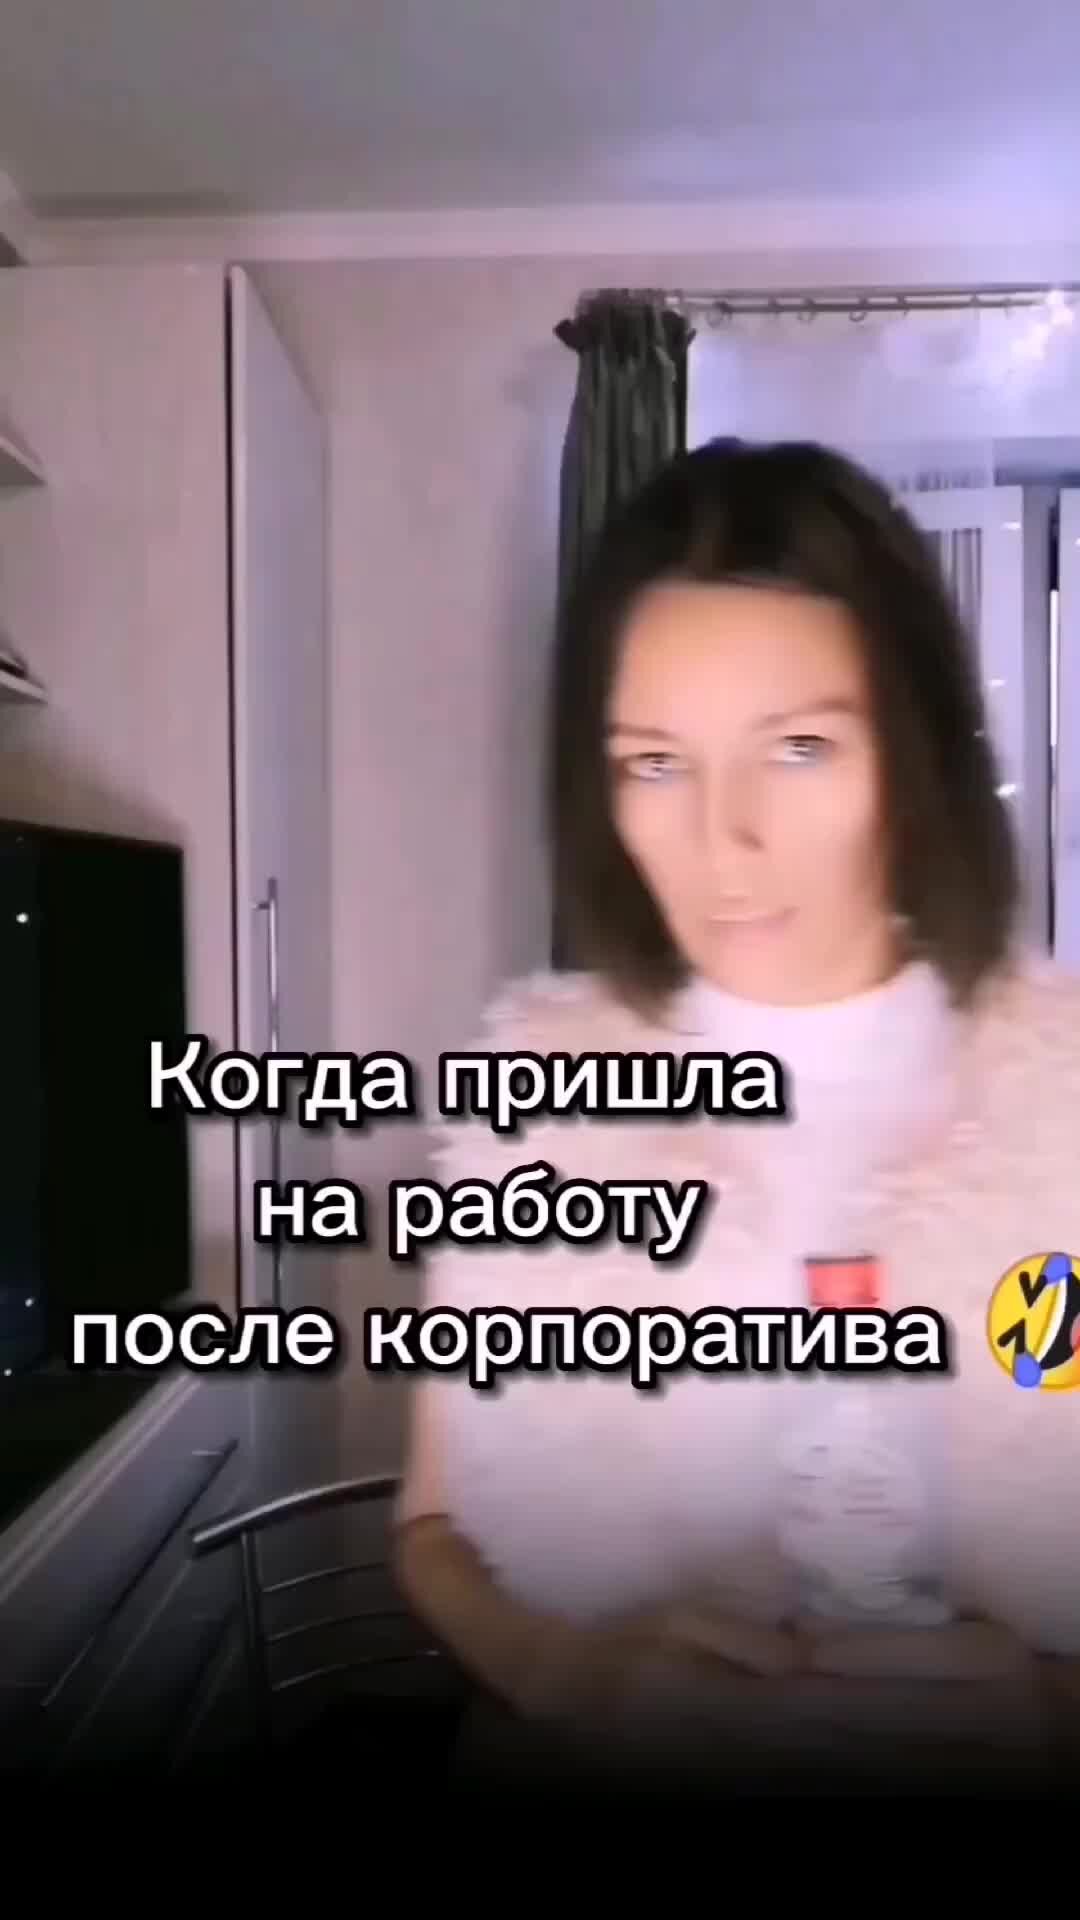 За кулисами во время перерыва в съемках - порно видео на kingplayclub.ru